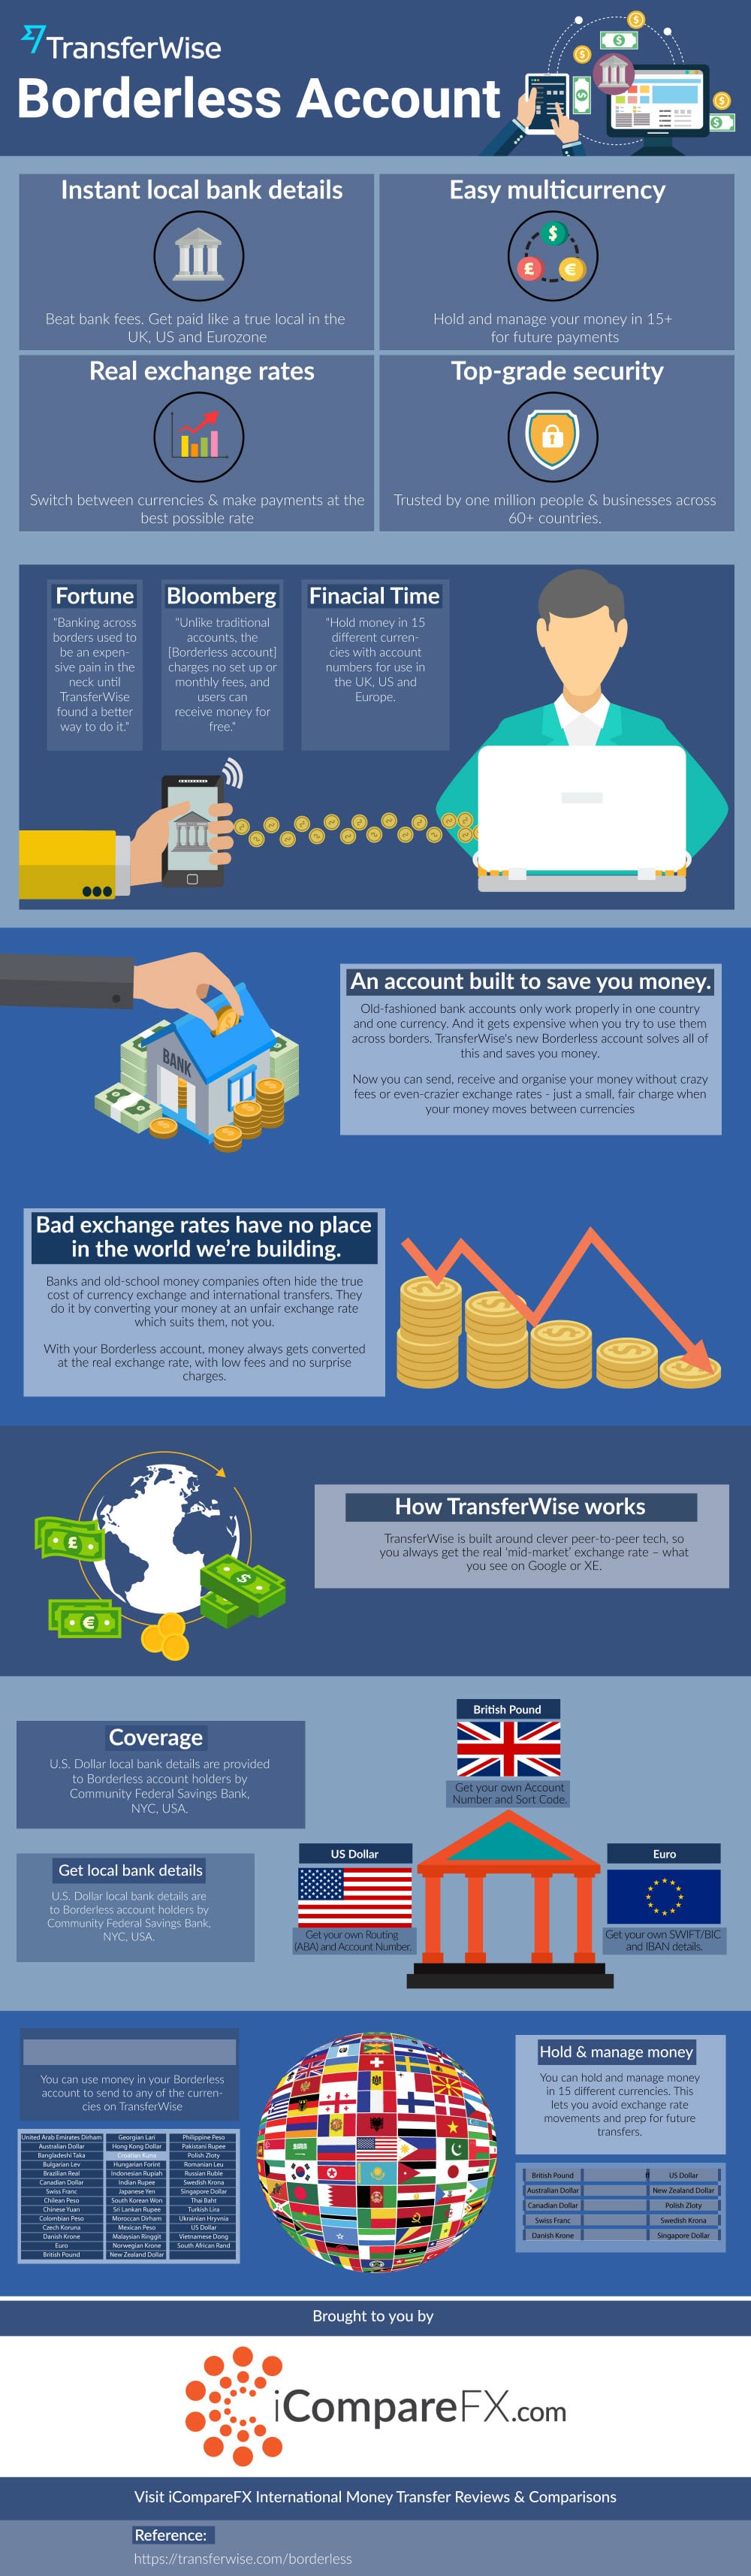 TransferWise Borderless account infographic